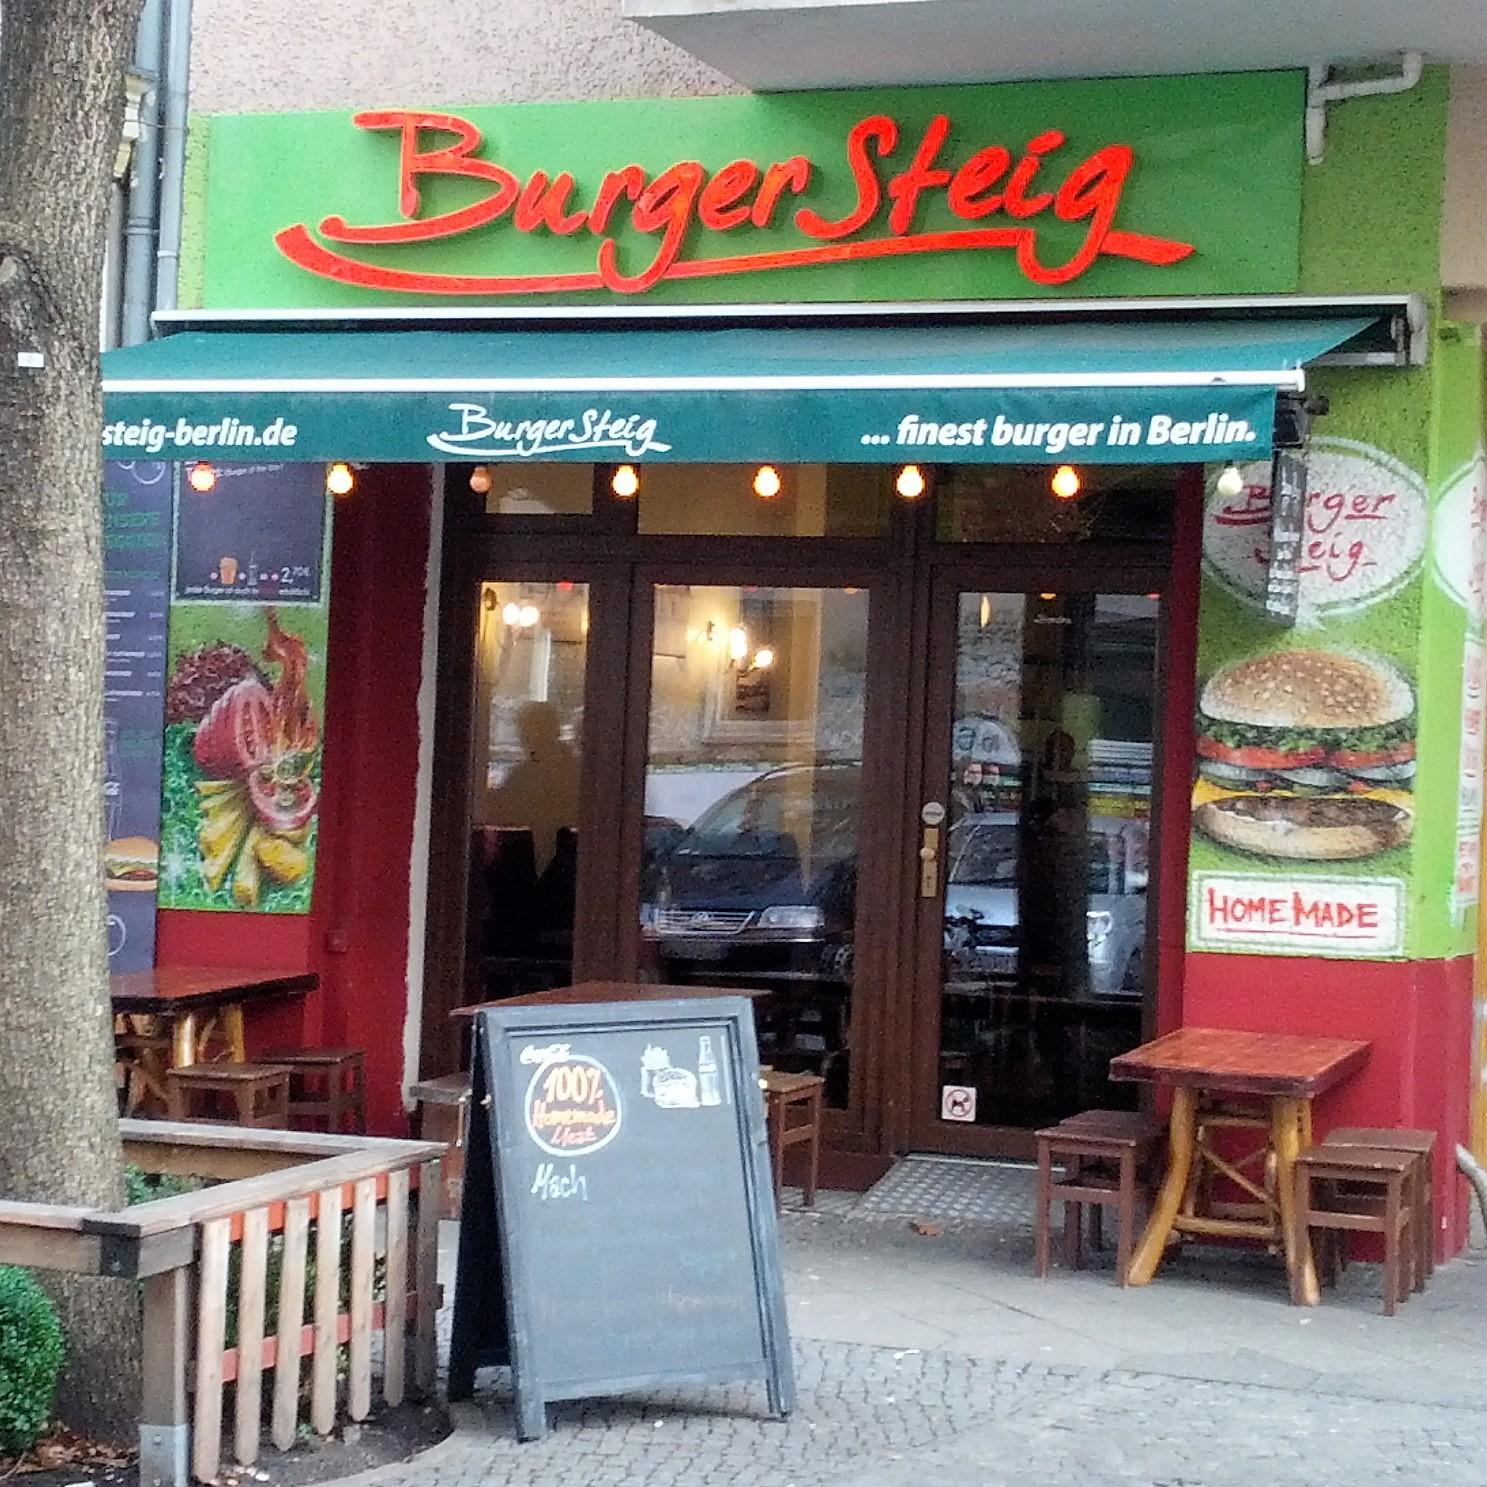 Restaurant "BurgerSteig" in Berlin